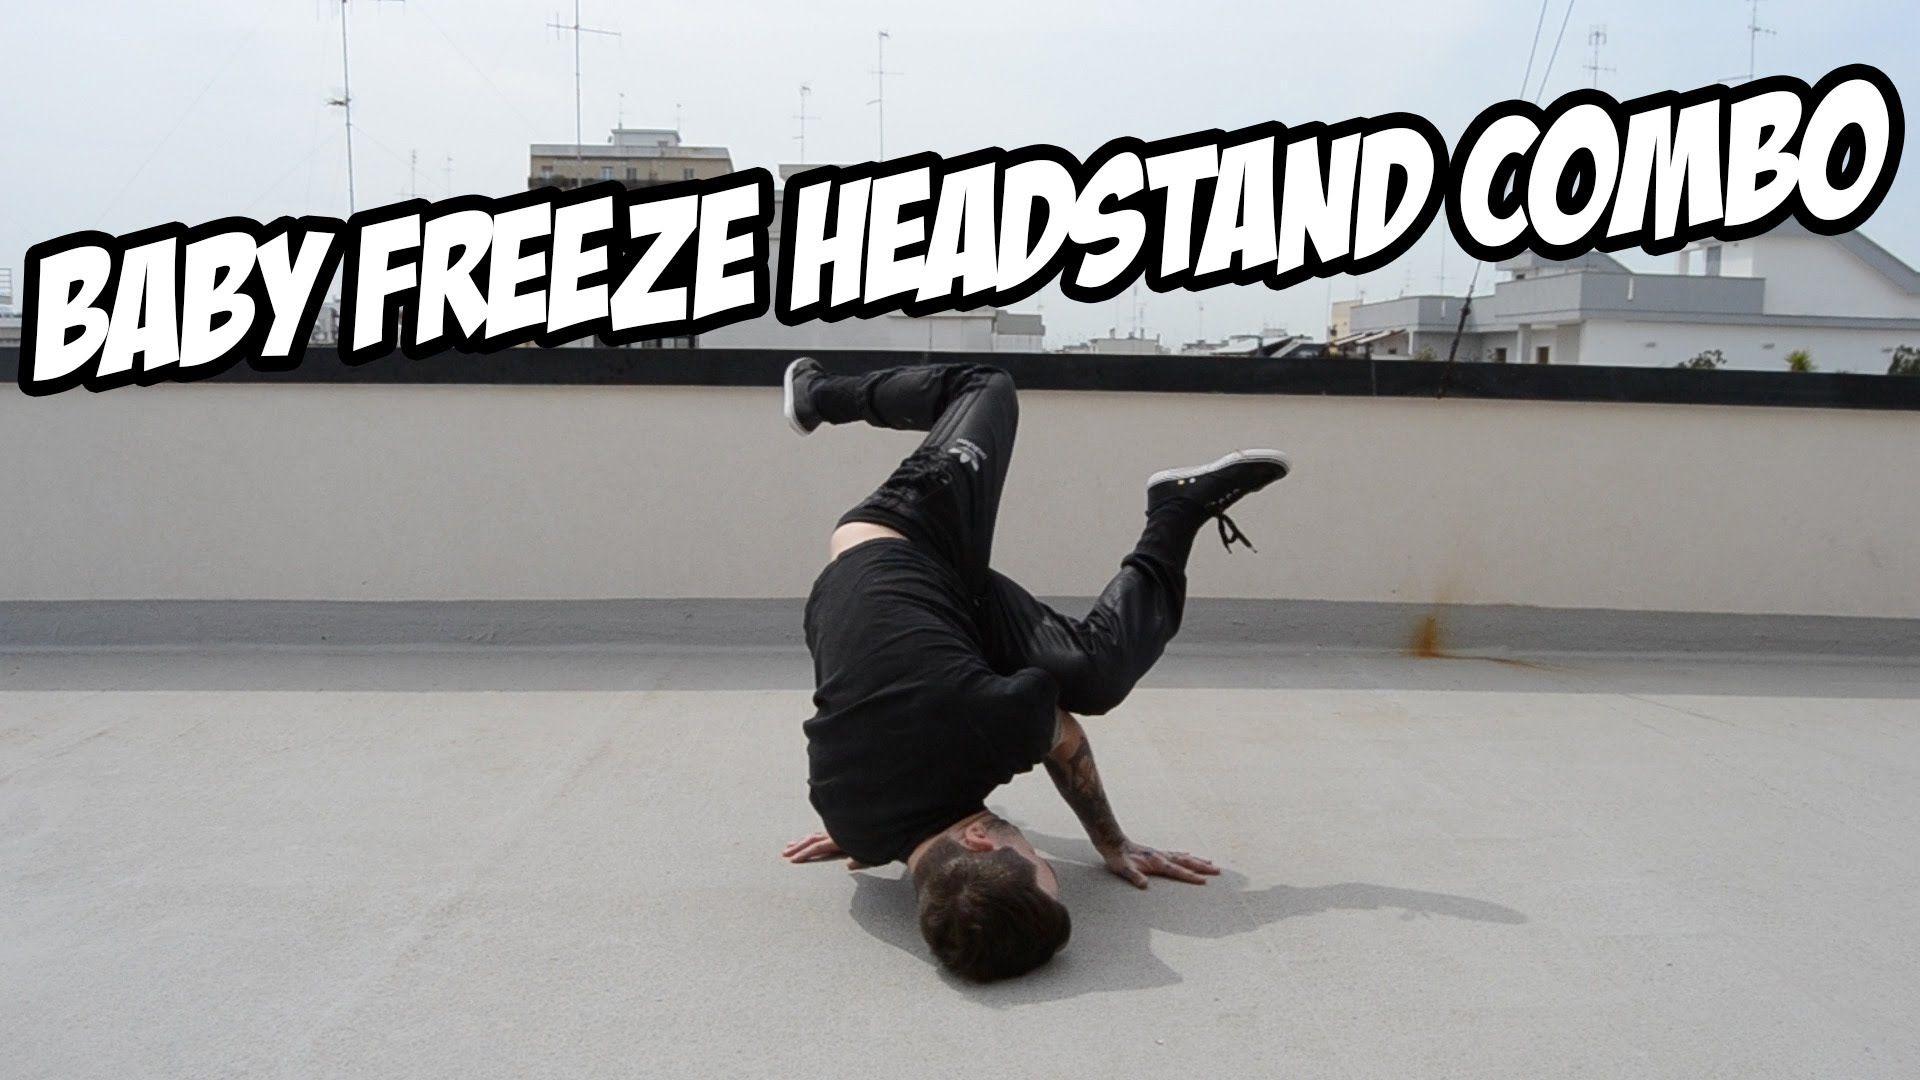 Breakdance Tutorial Baby Freeze Headstand Combo